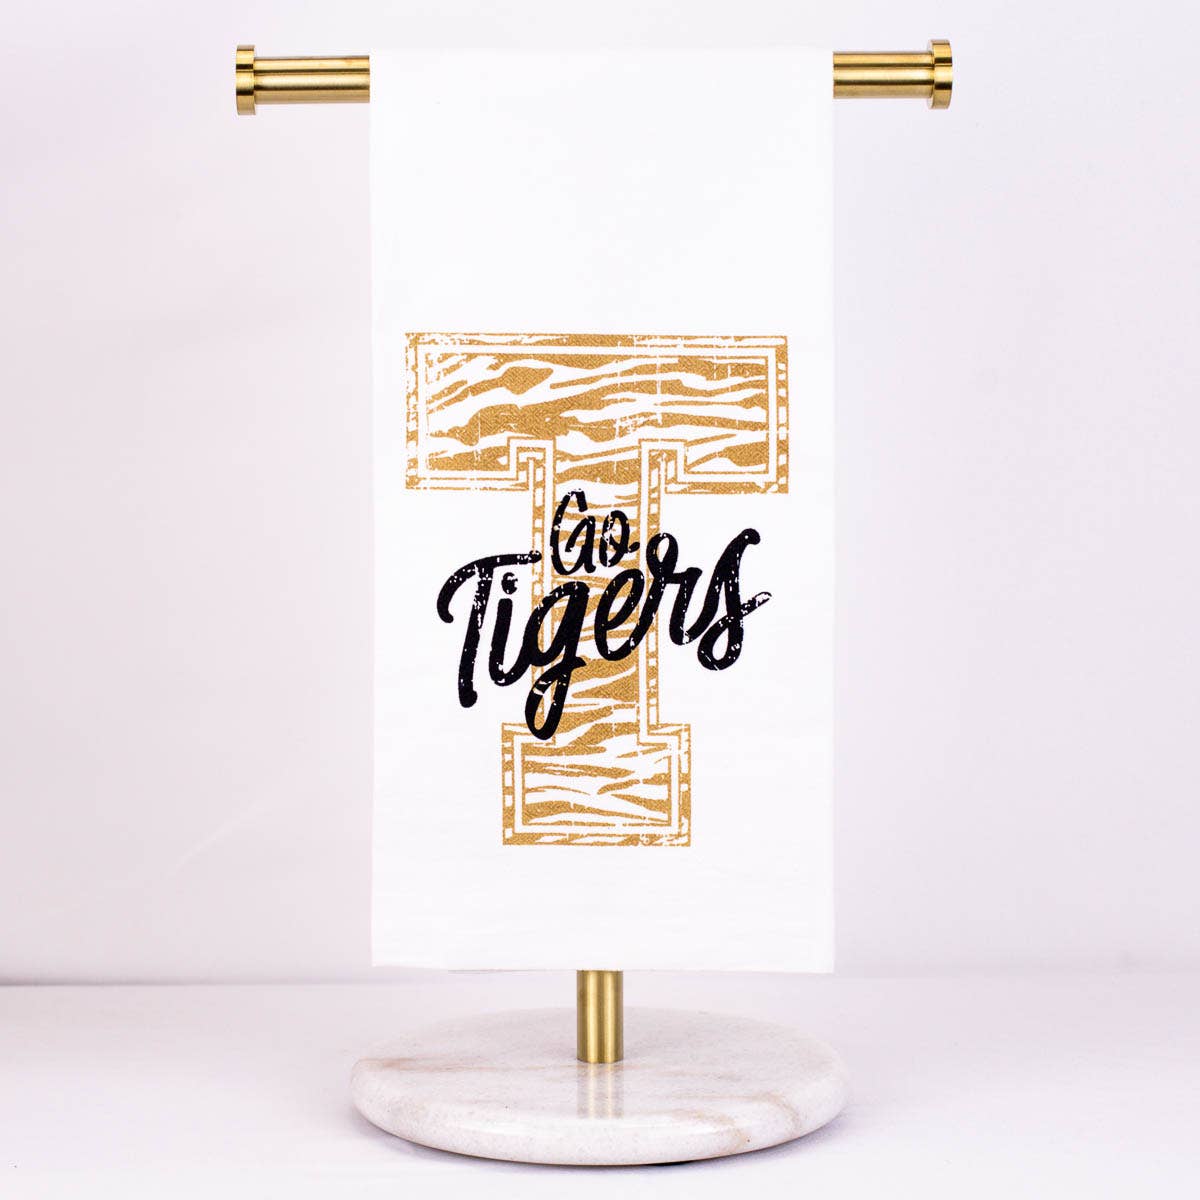 Go Tigers Flour Sack Hand Towel   White/Gold   20x28